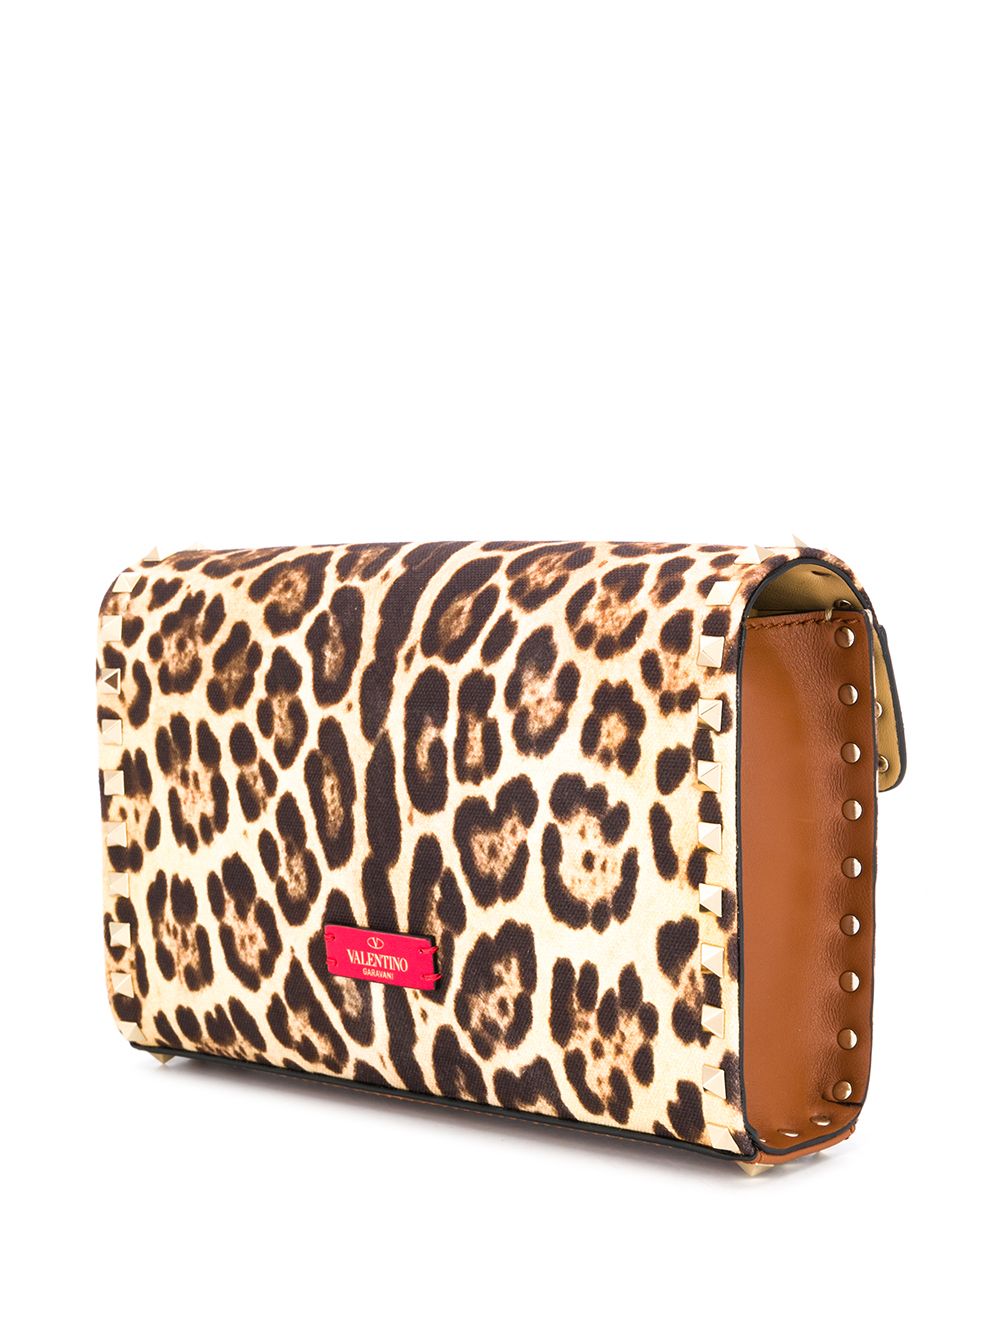 фото Valentino сумка на плечо valentino garavani rockstud с леопардовым принтом